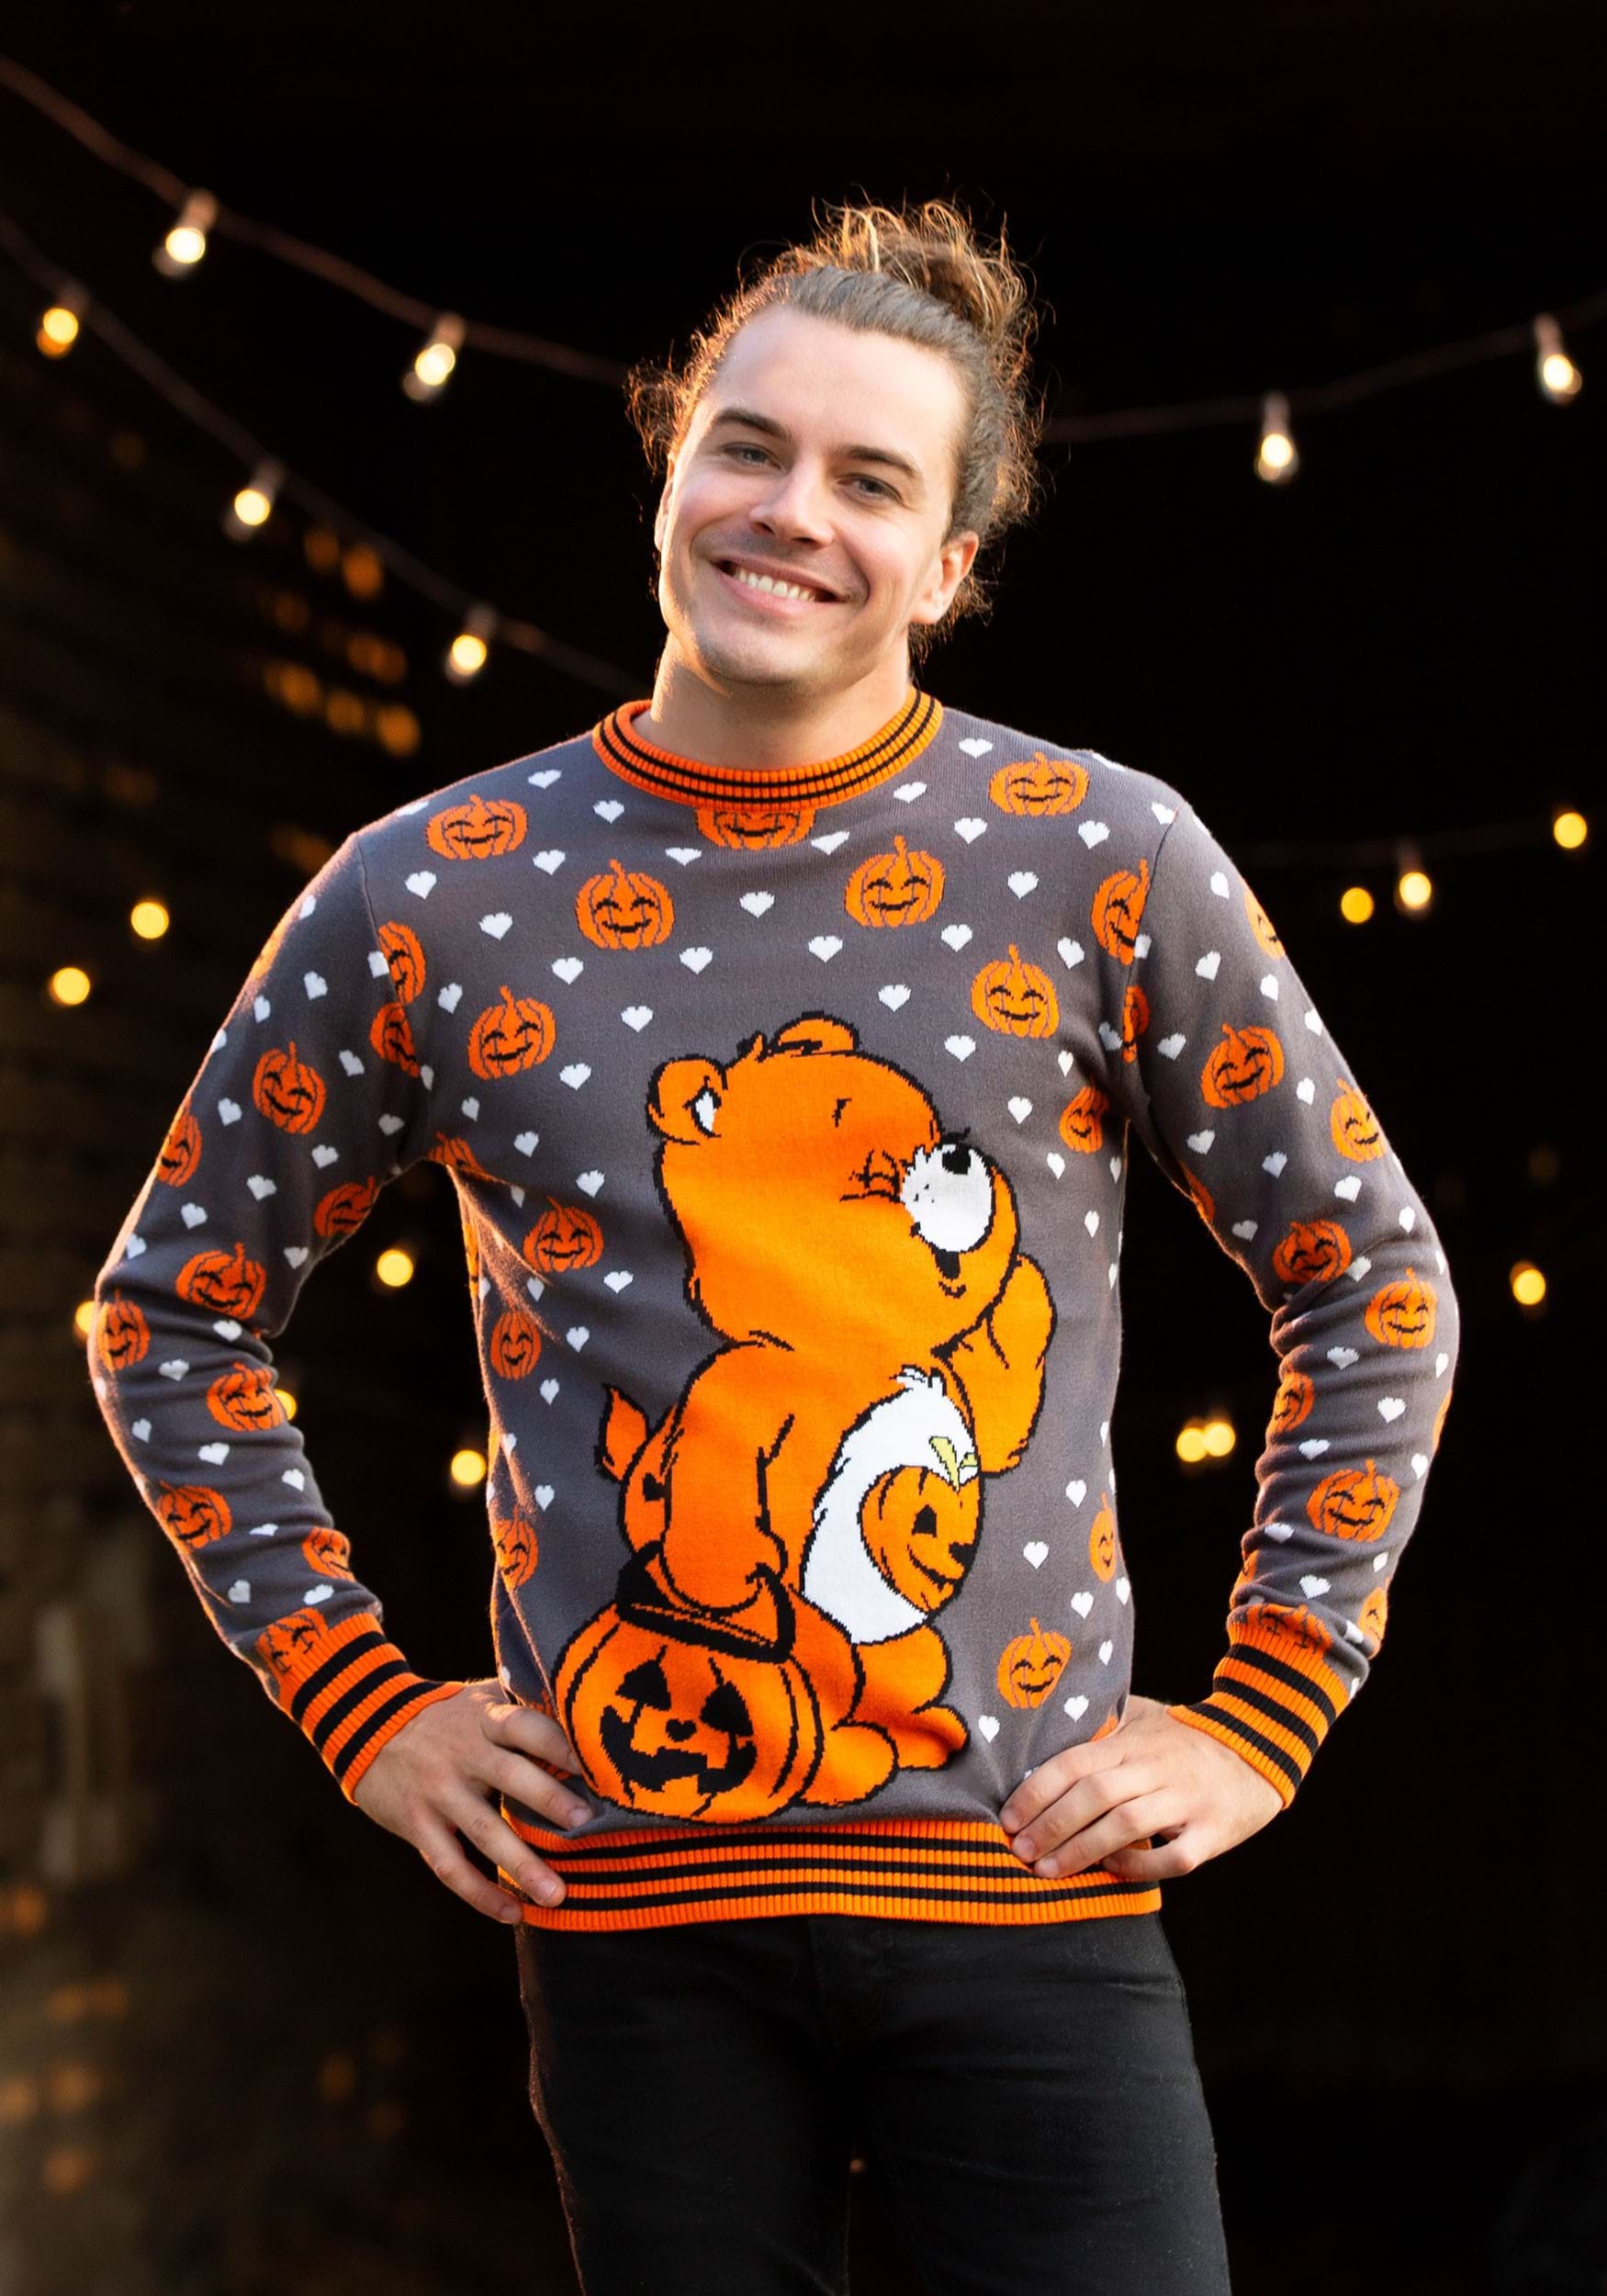 Care Bears Trick-or-Sweet Bear Adult Halloween Sweater